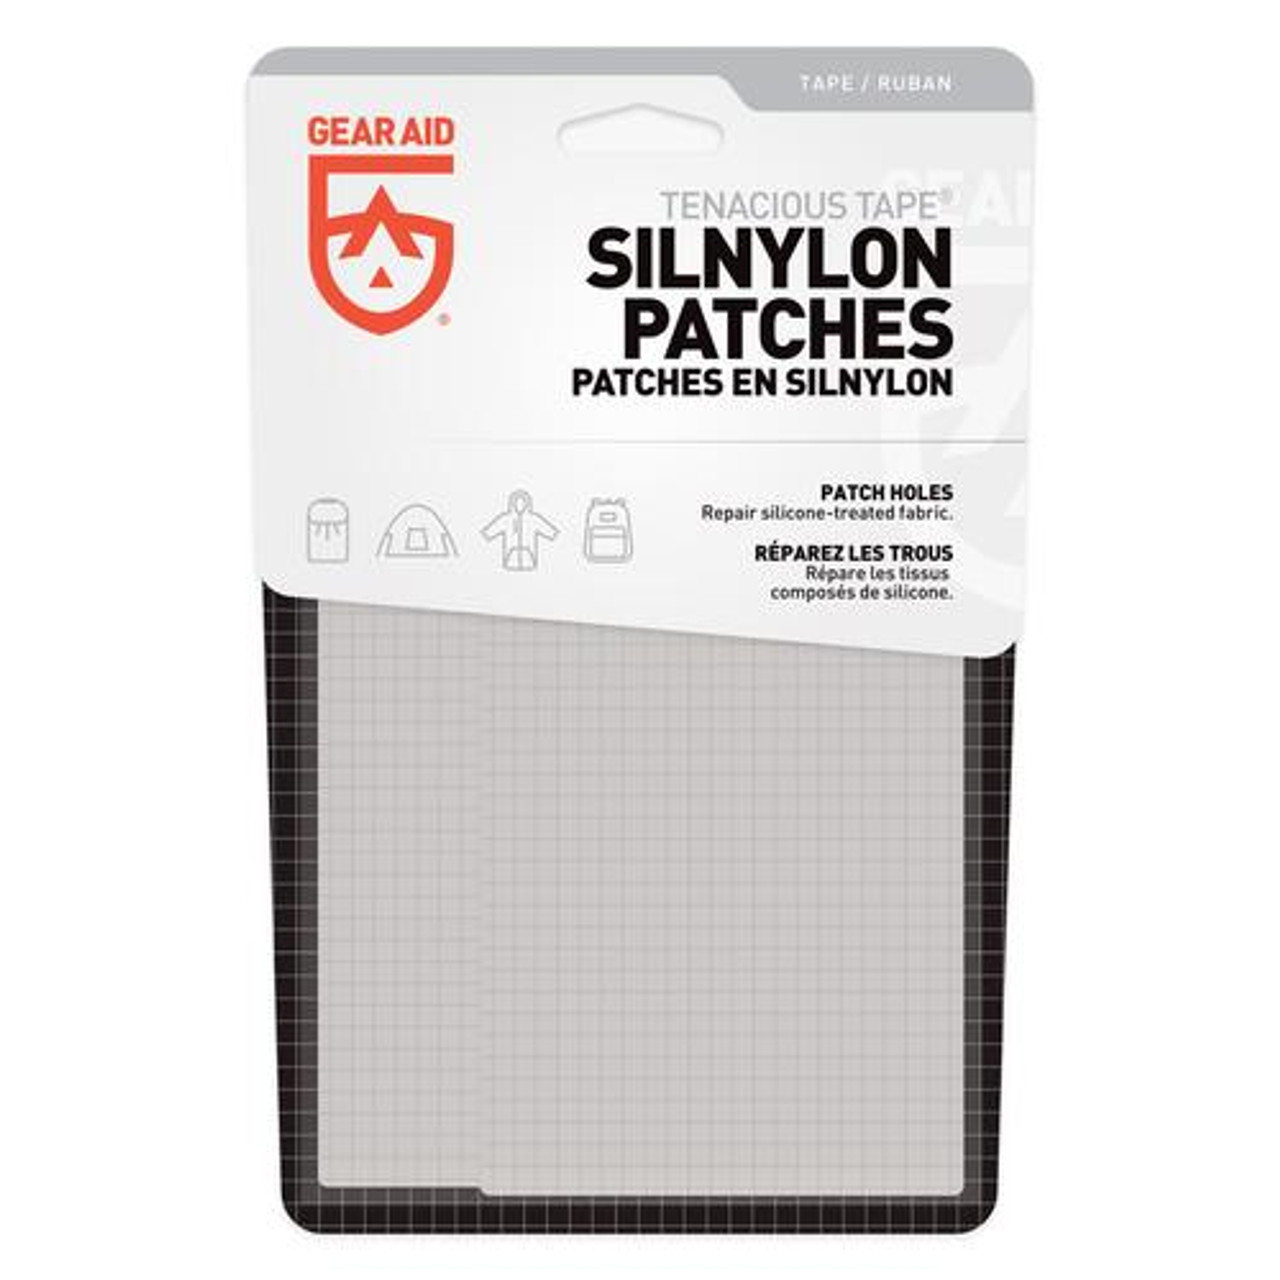 Tenacious Tape Silnylon Patches - Seek Outside